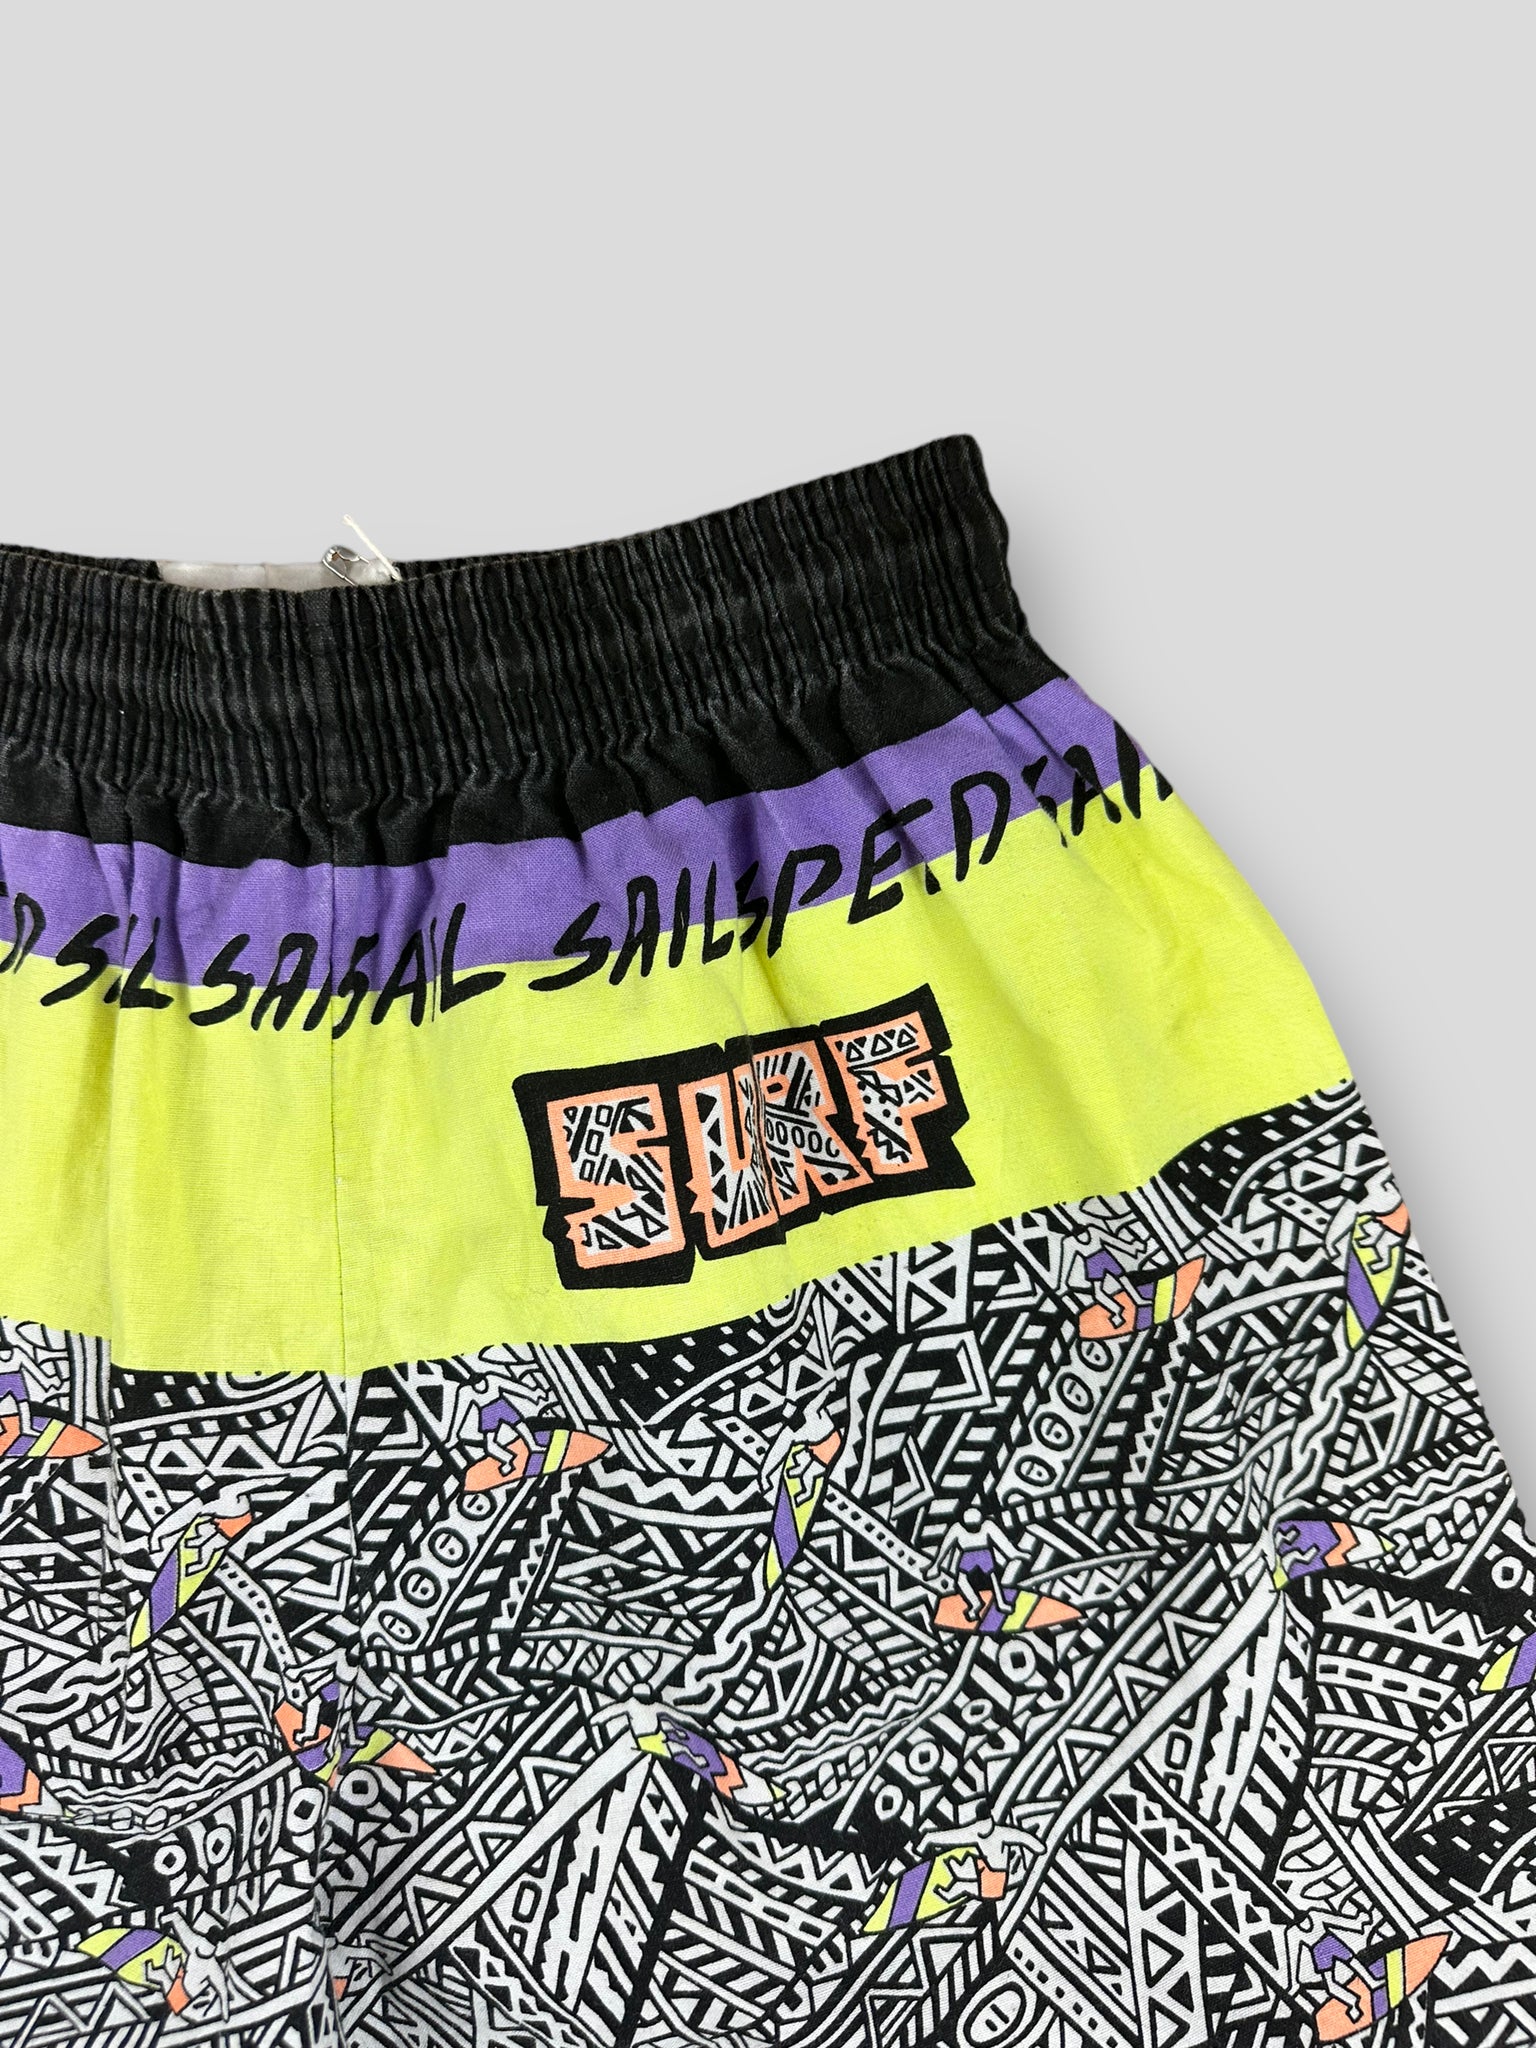 Graphic Multi-coloured Shorts